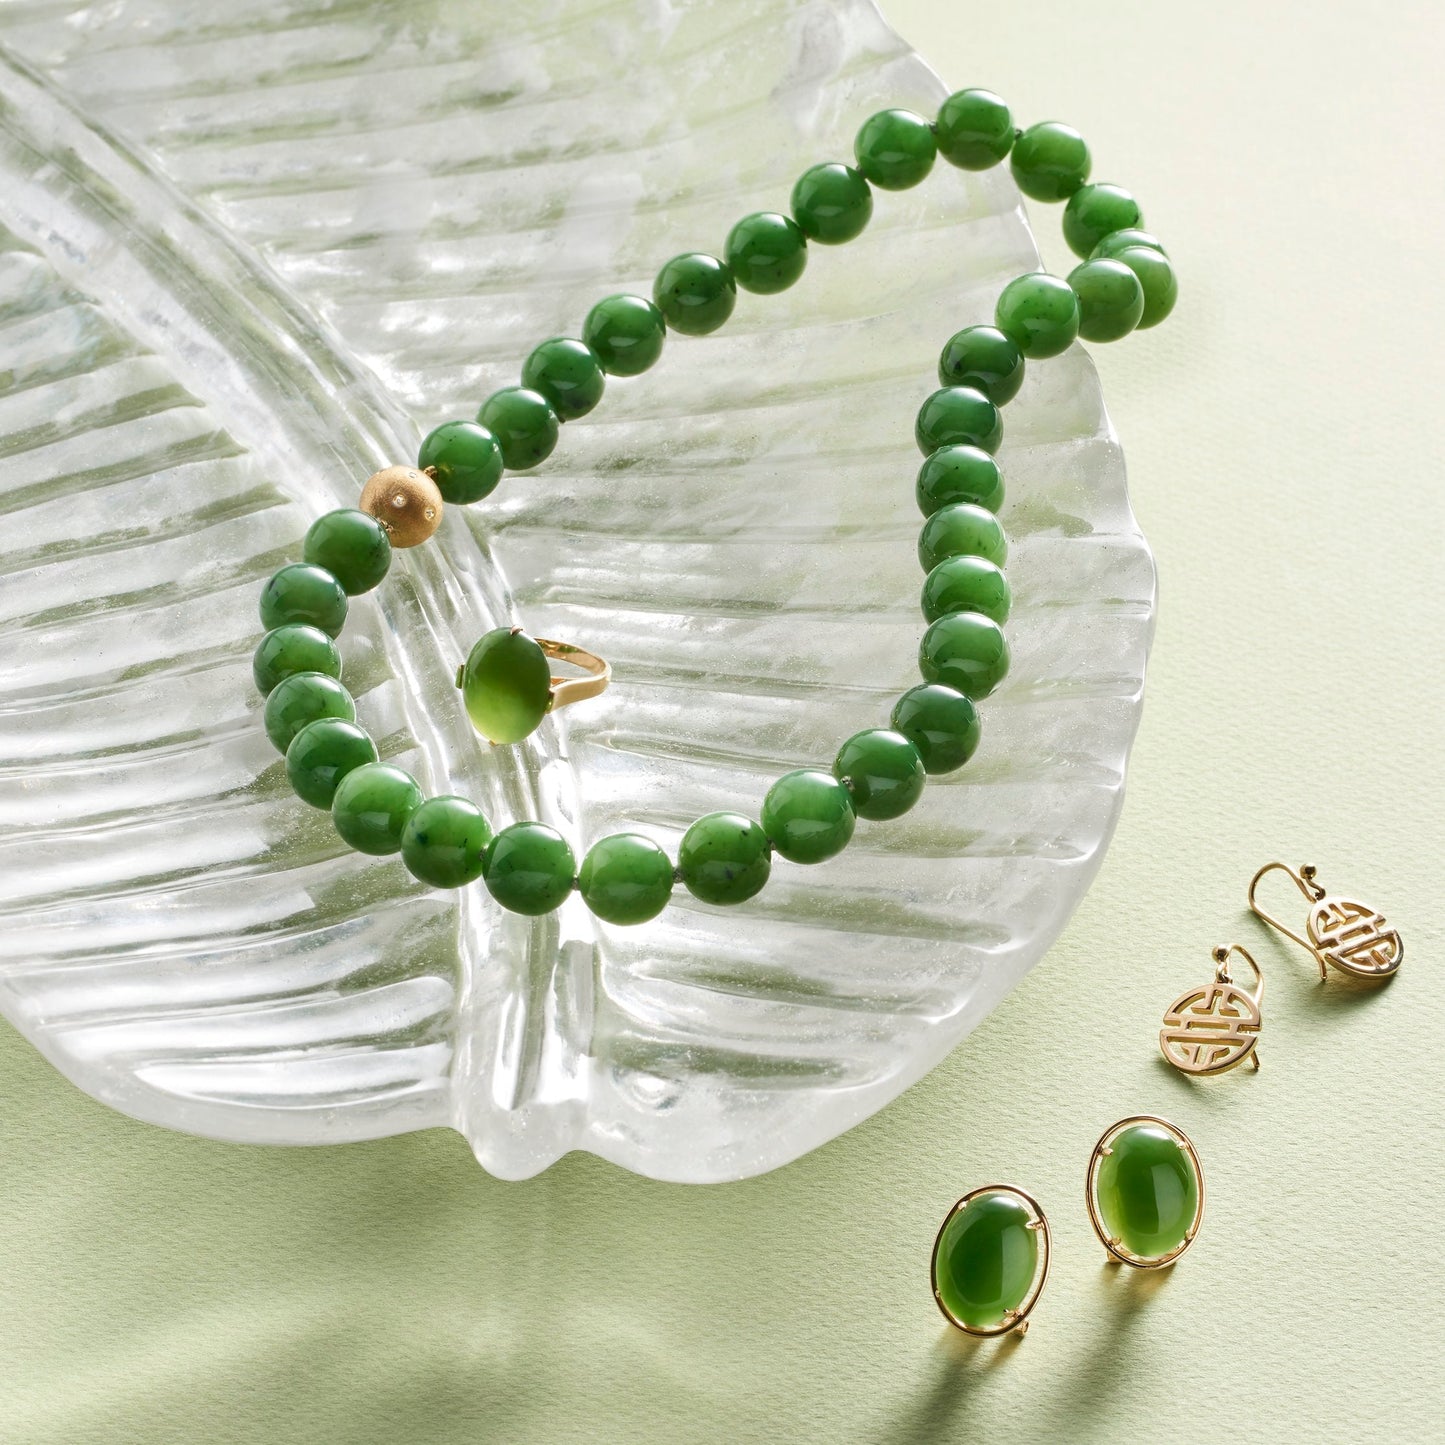 Peninsula Earrings in Green Nephrite Jade